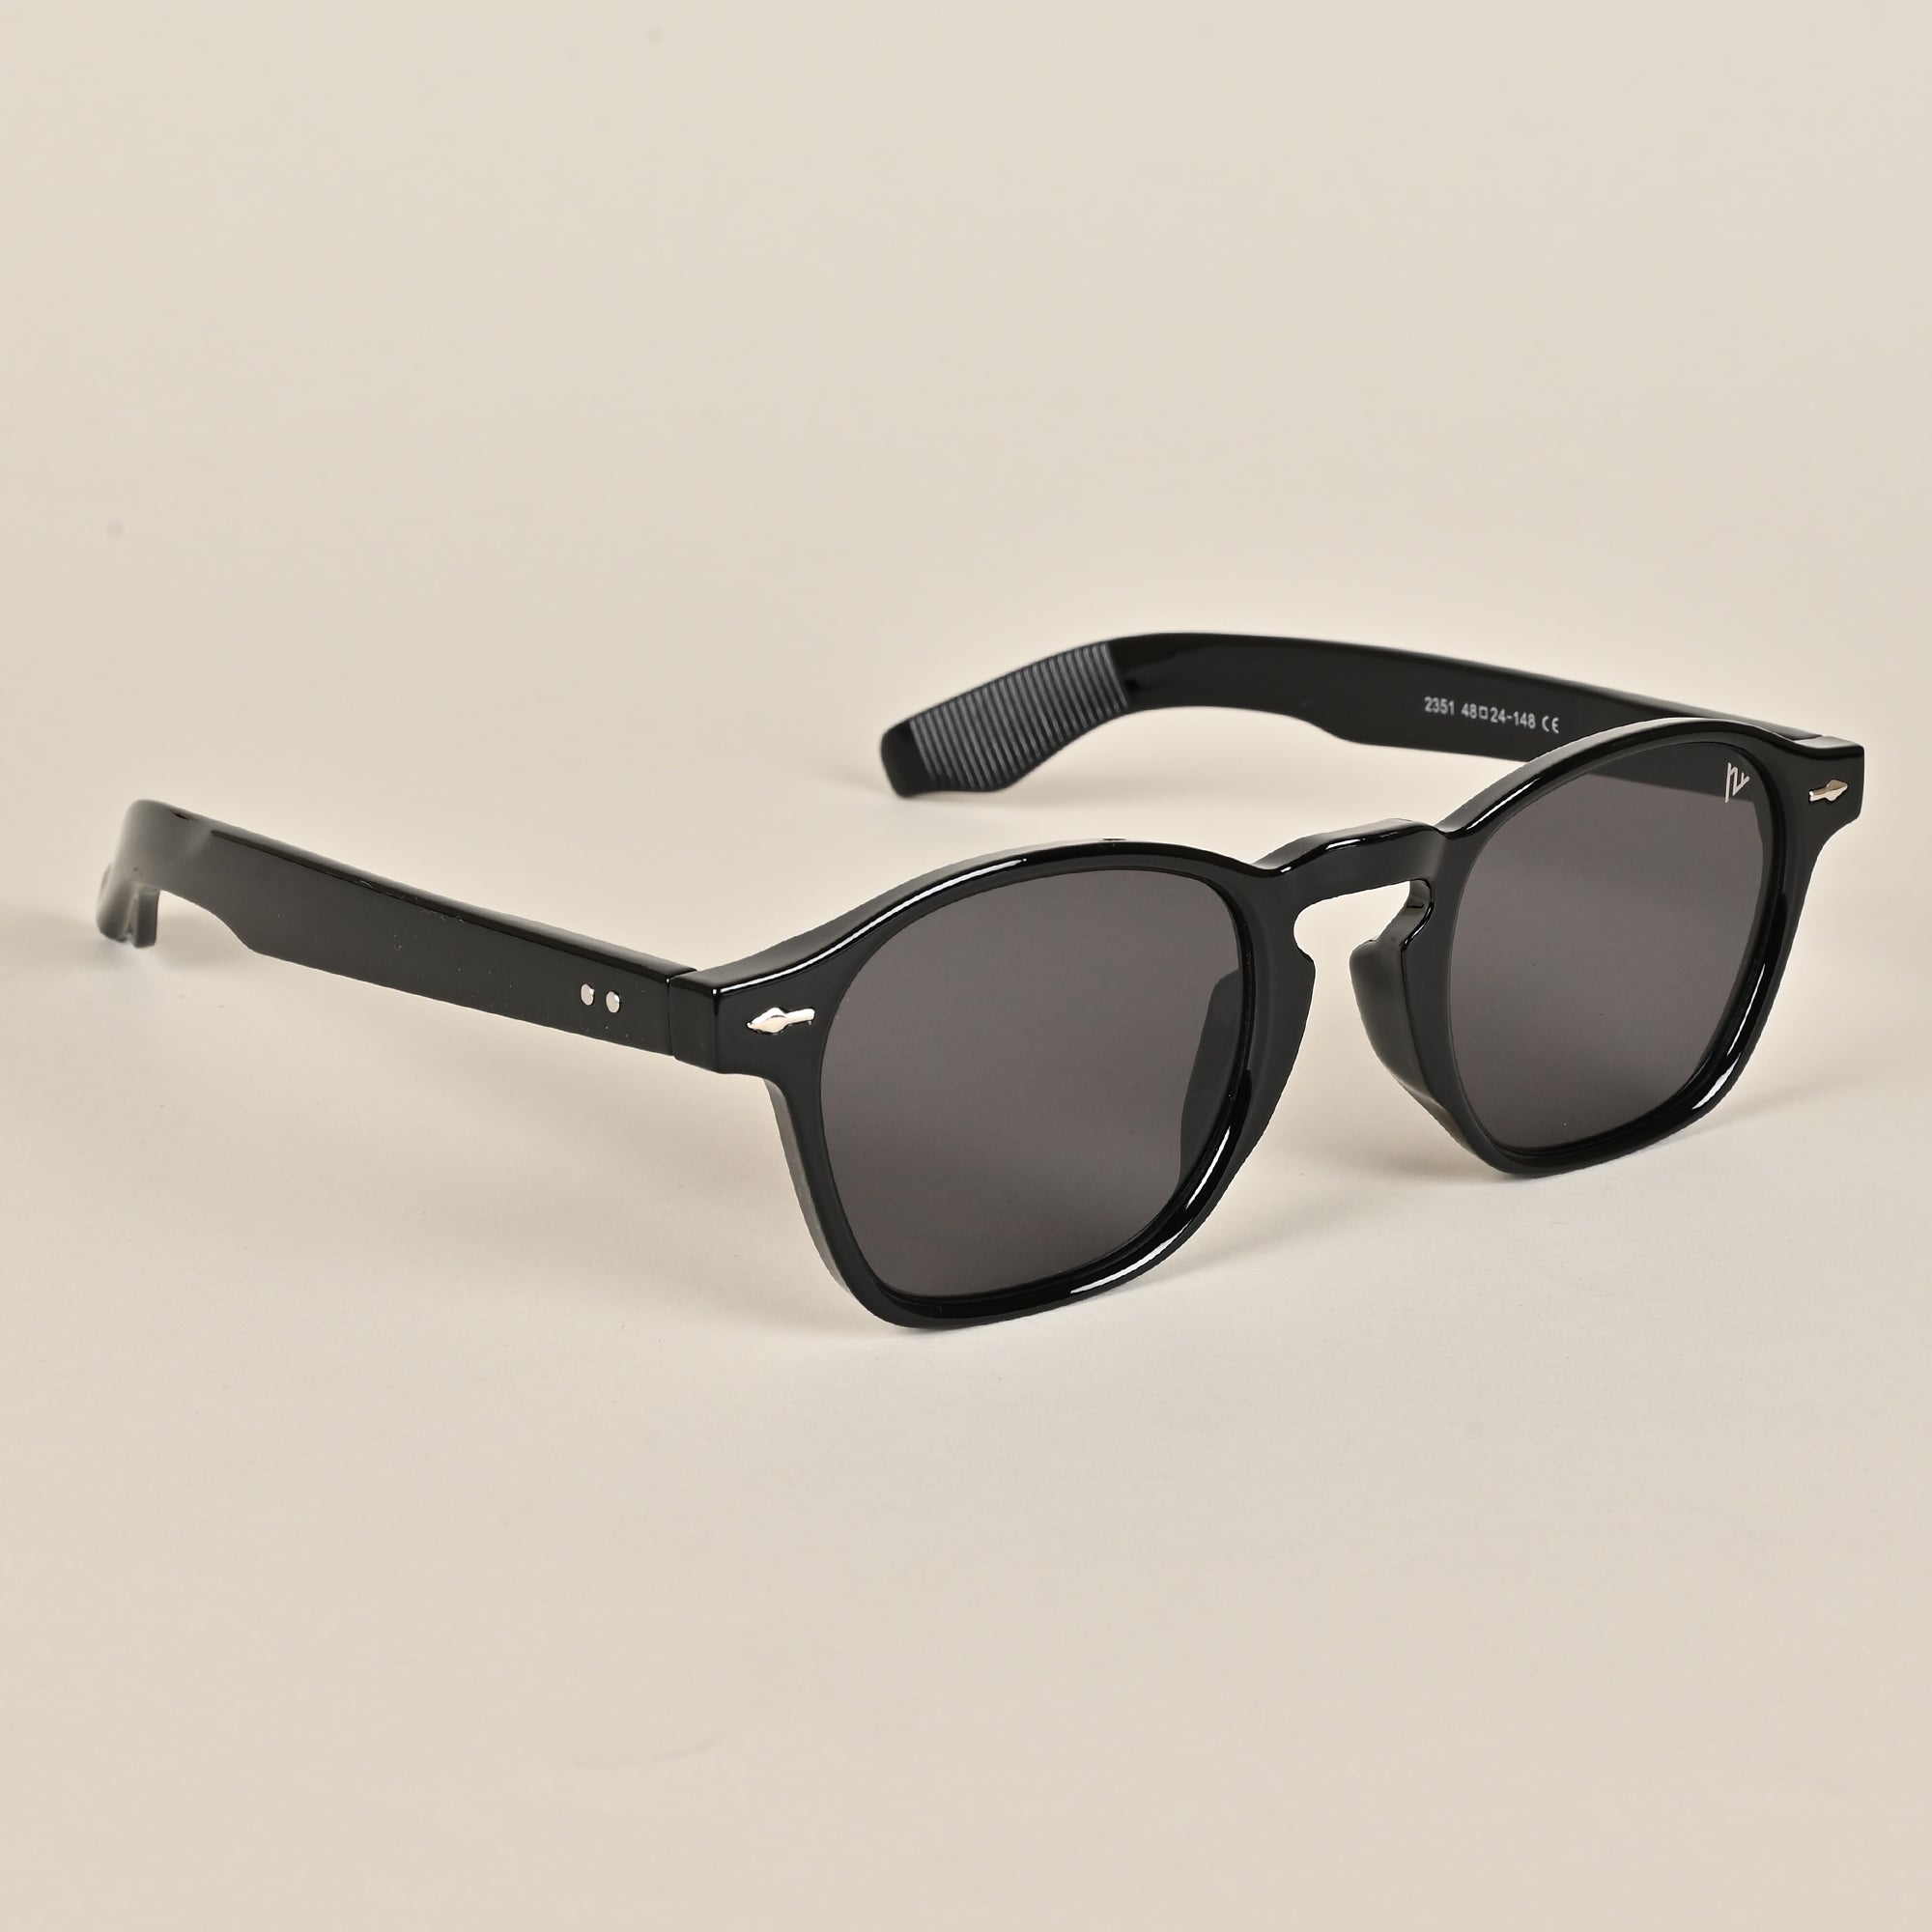 Voyage Black Round Sunglasses for Men & Women - MG3960